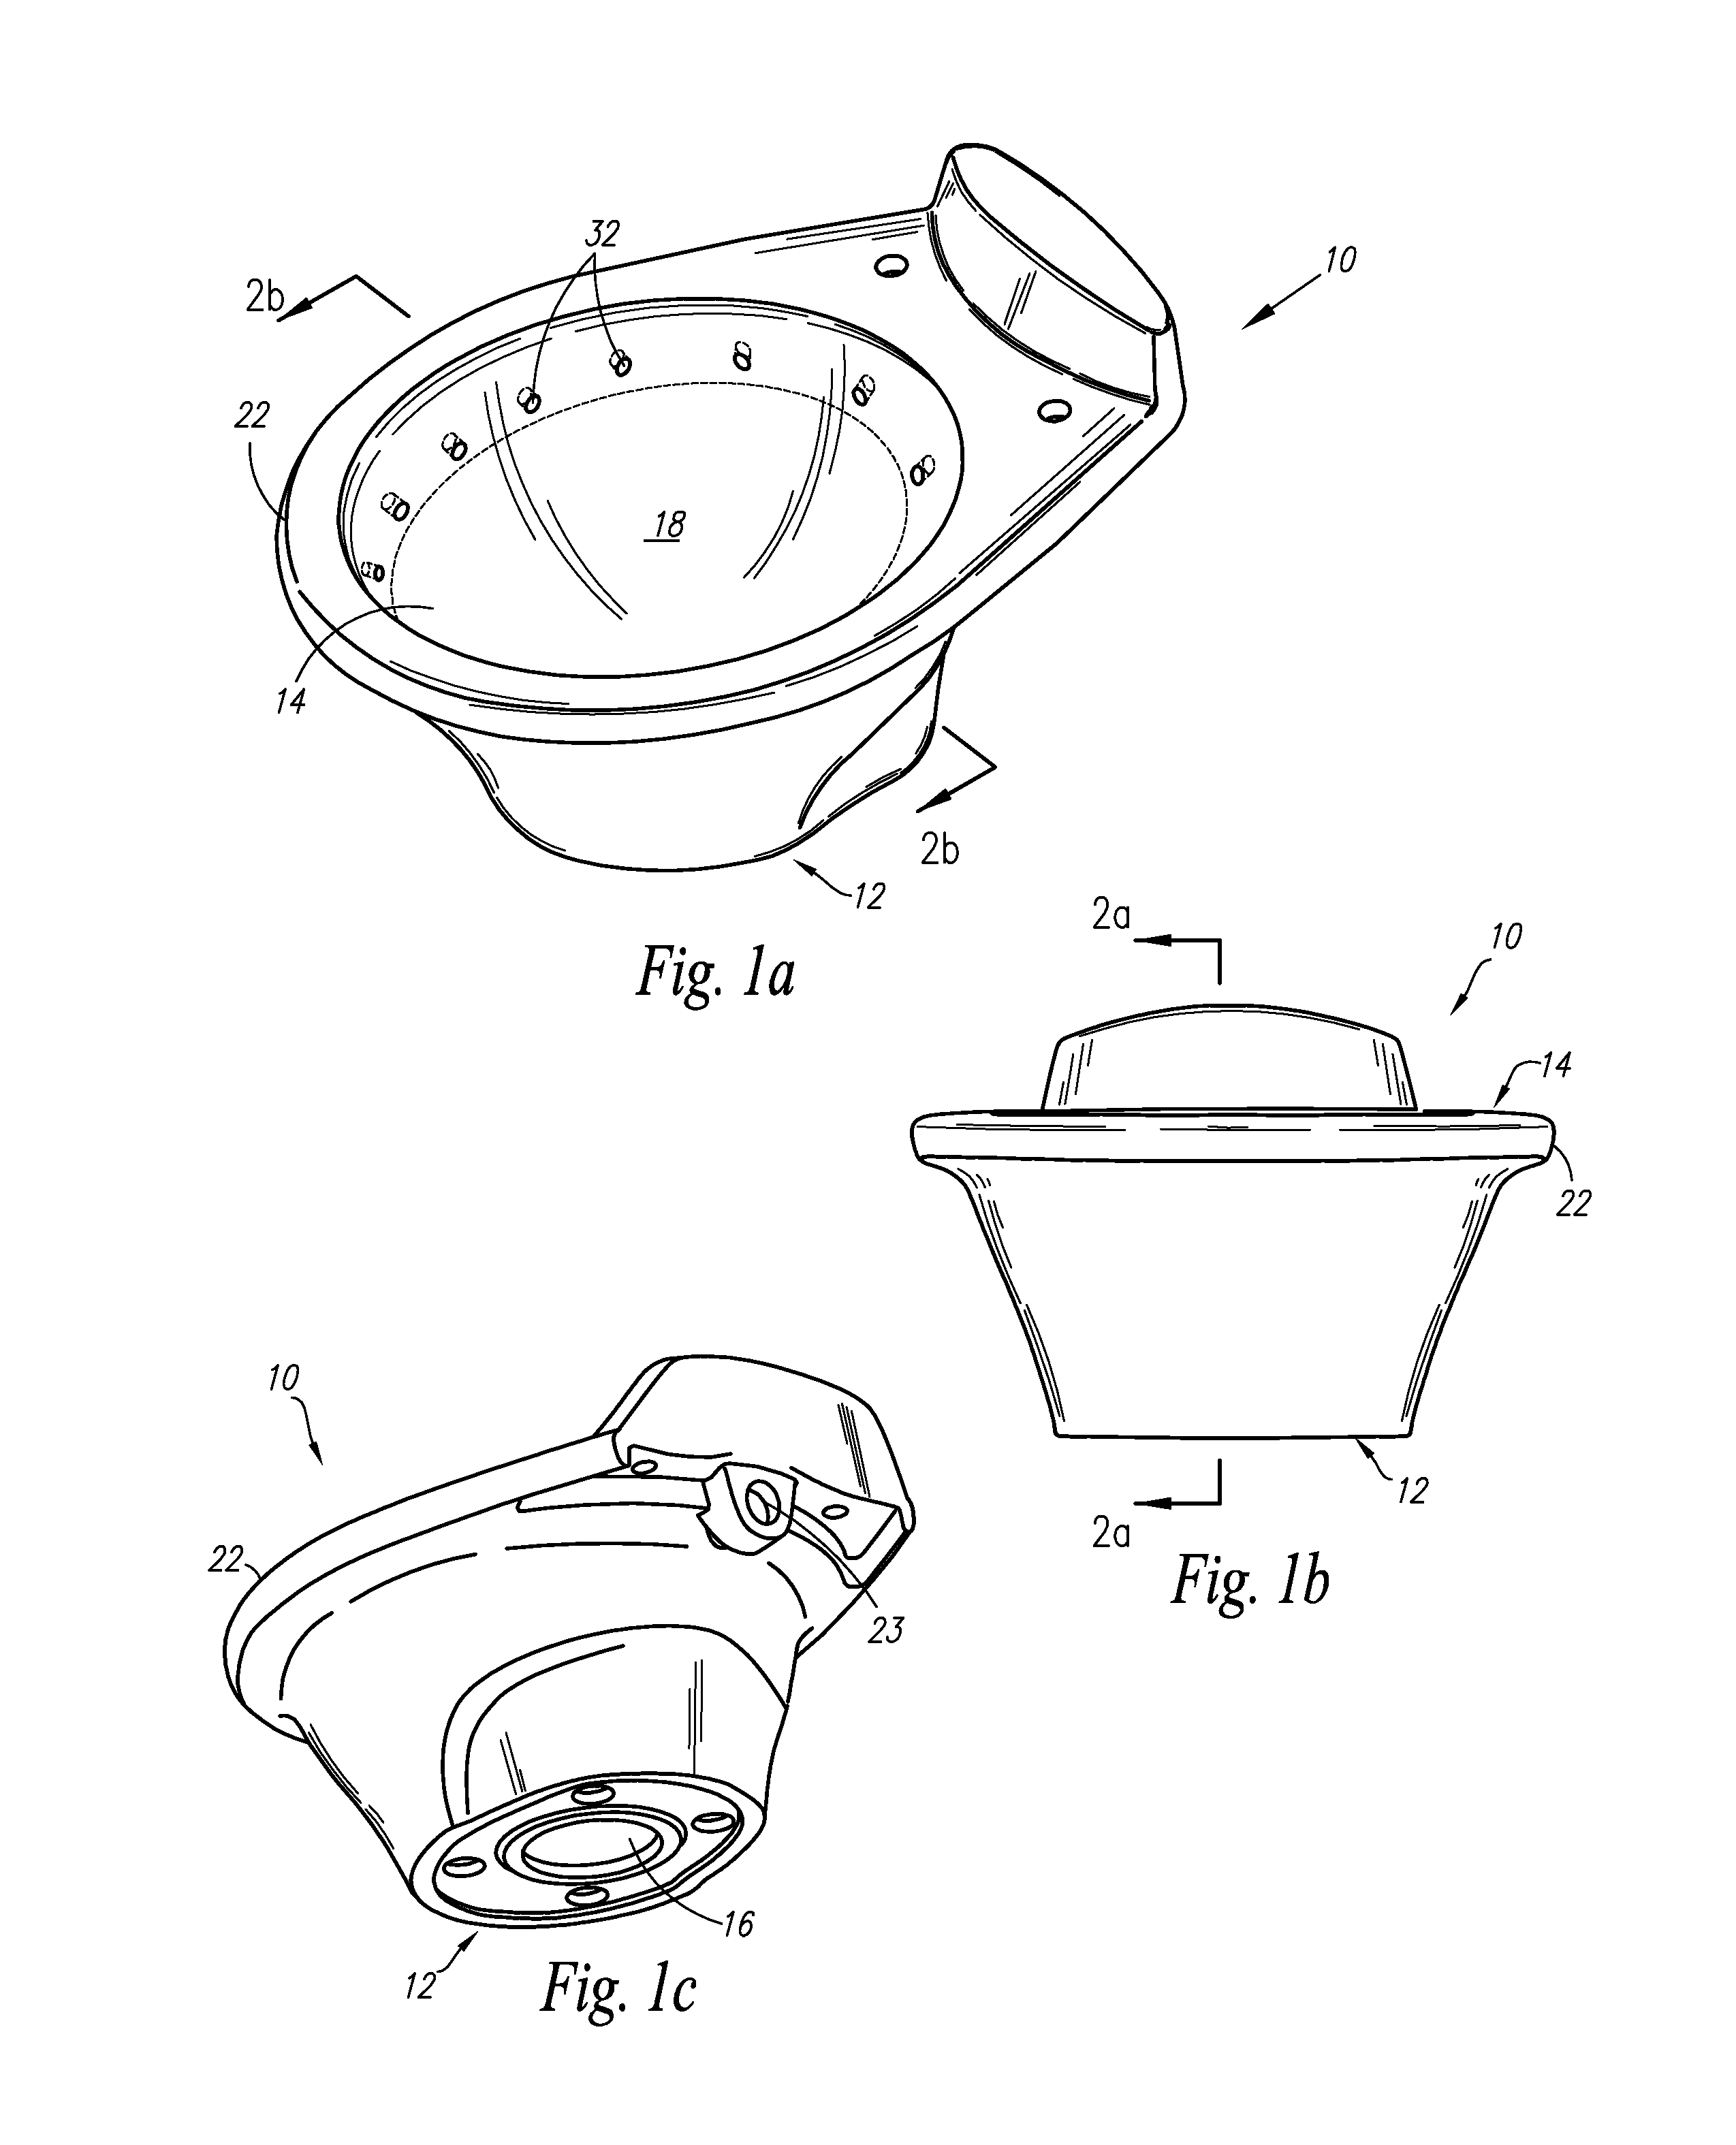 Exterior rim wash bowl